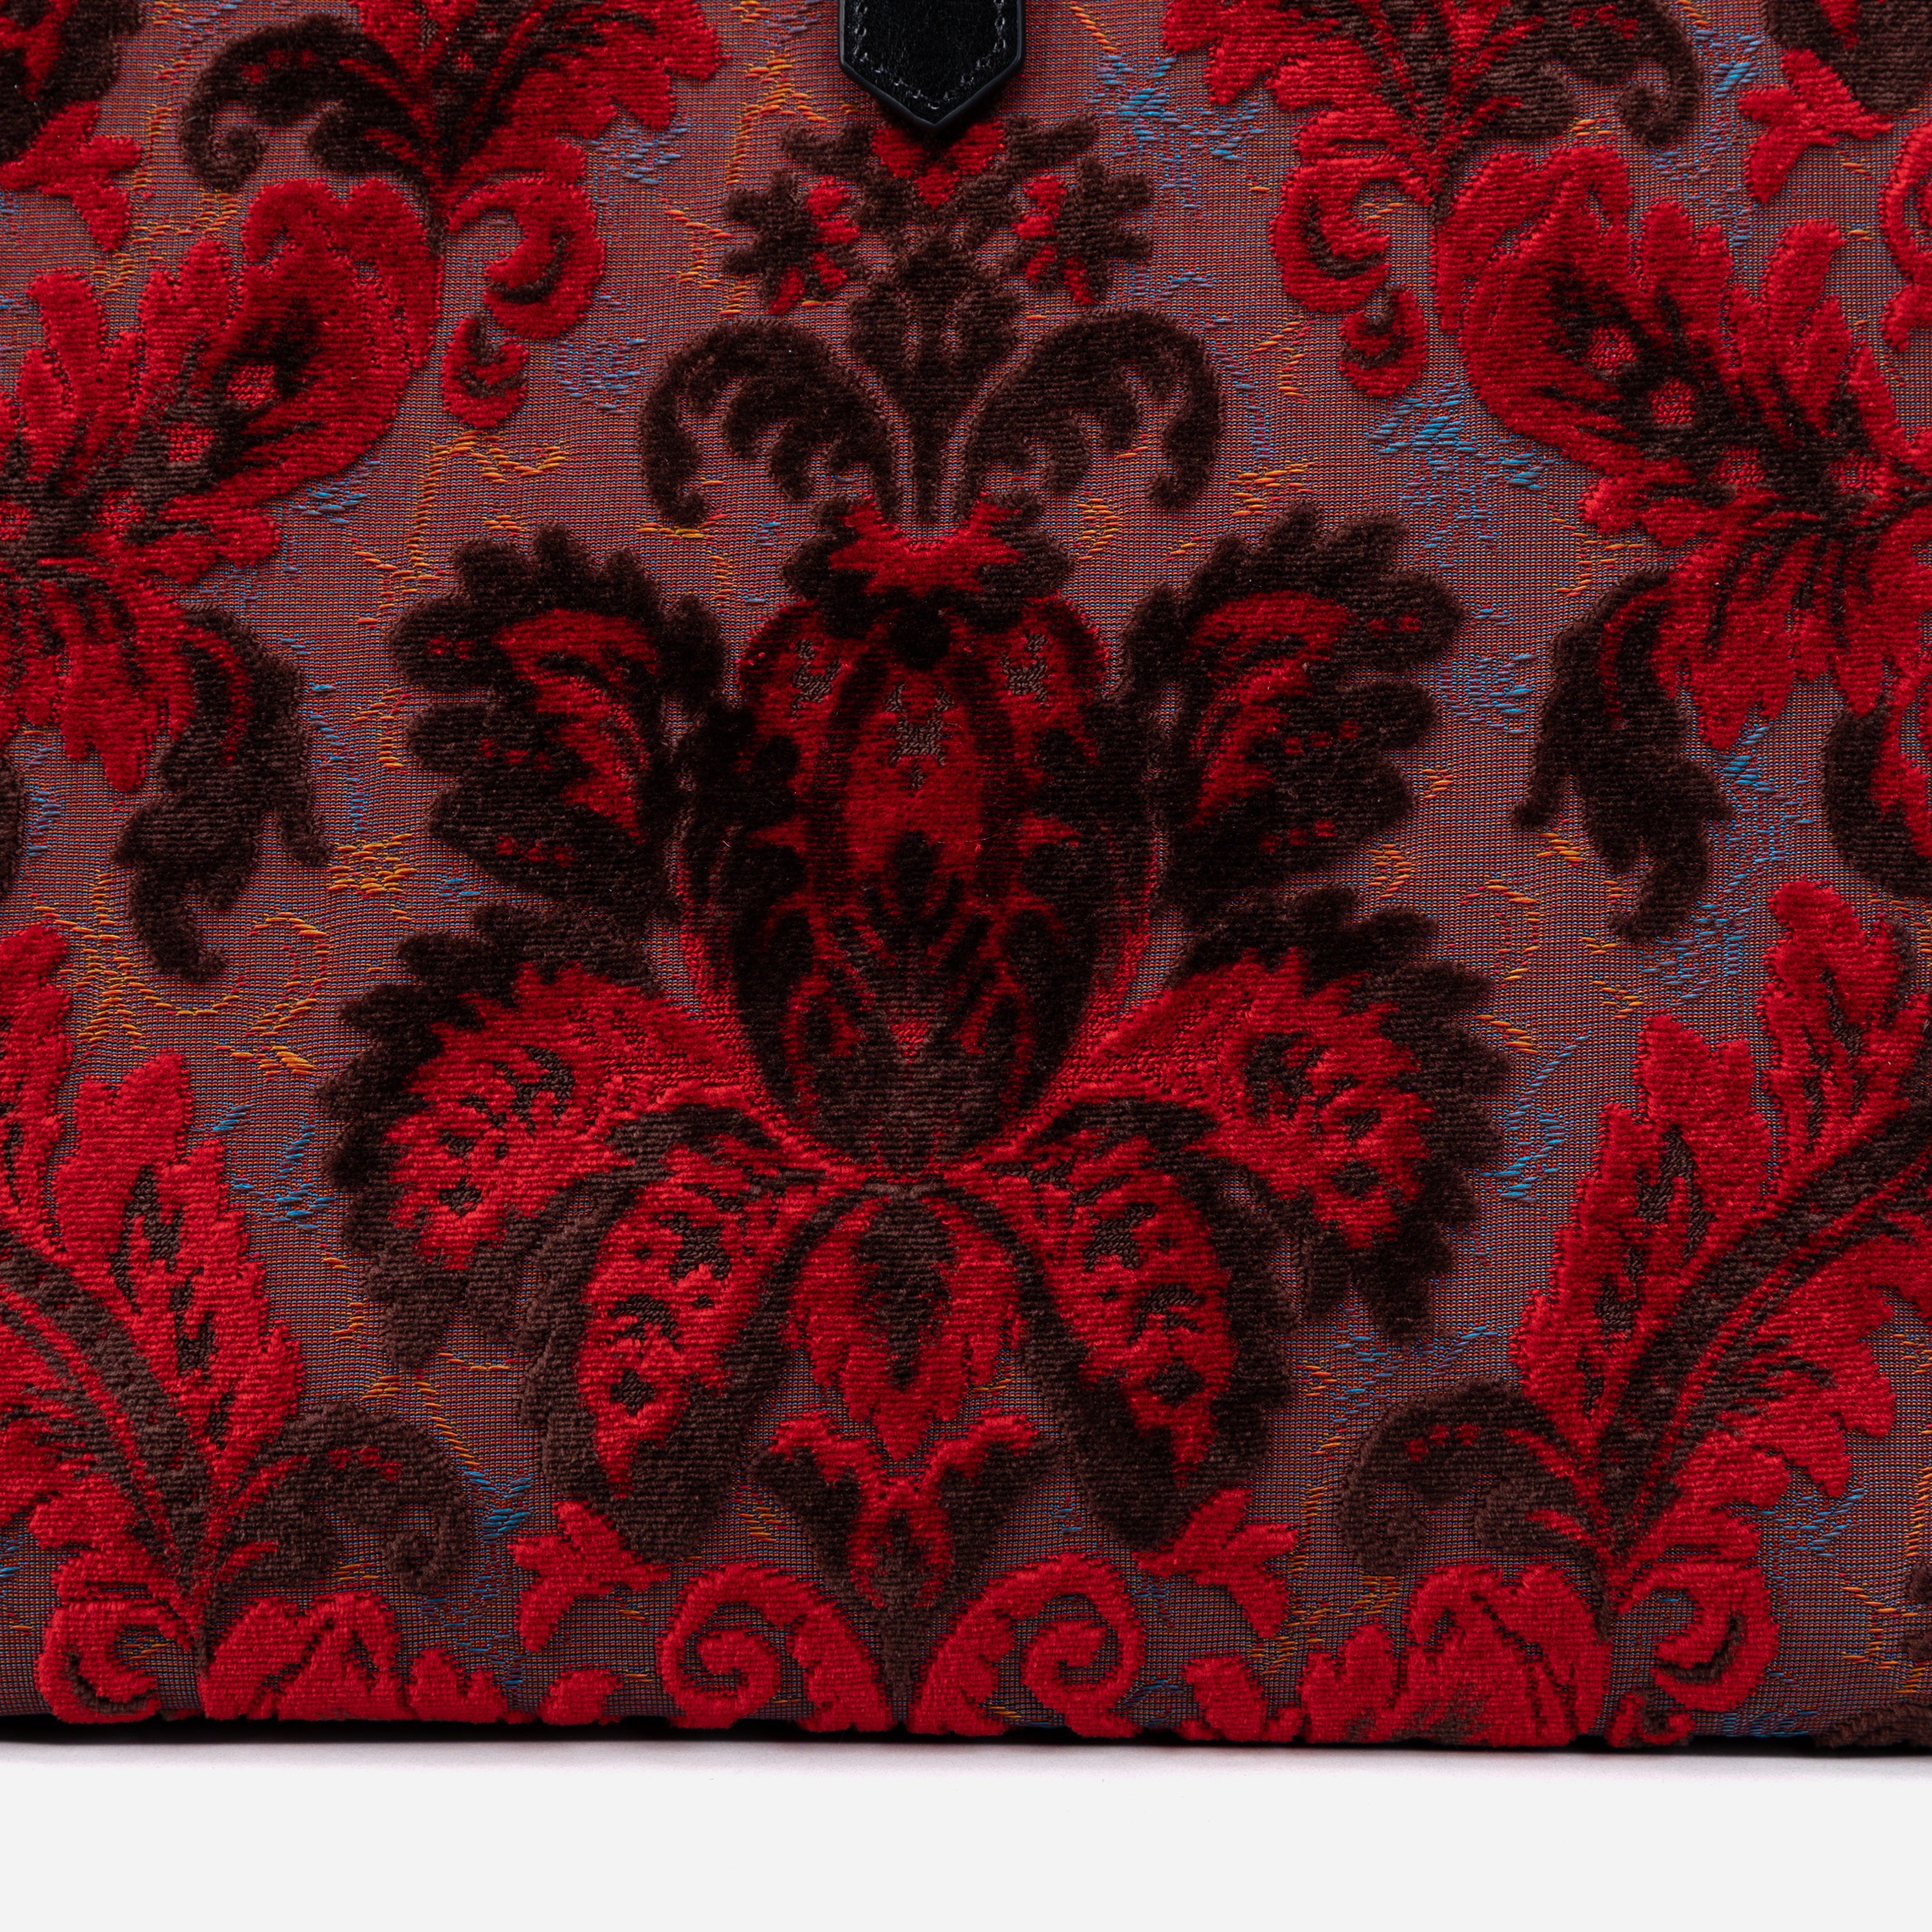 Mary Poppins Carpetbag Revival scarlet weekender pattern